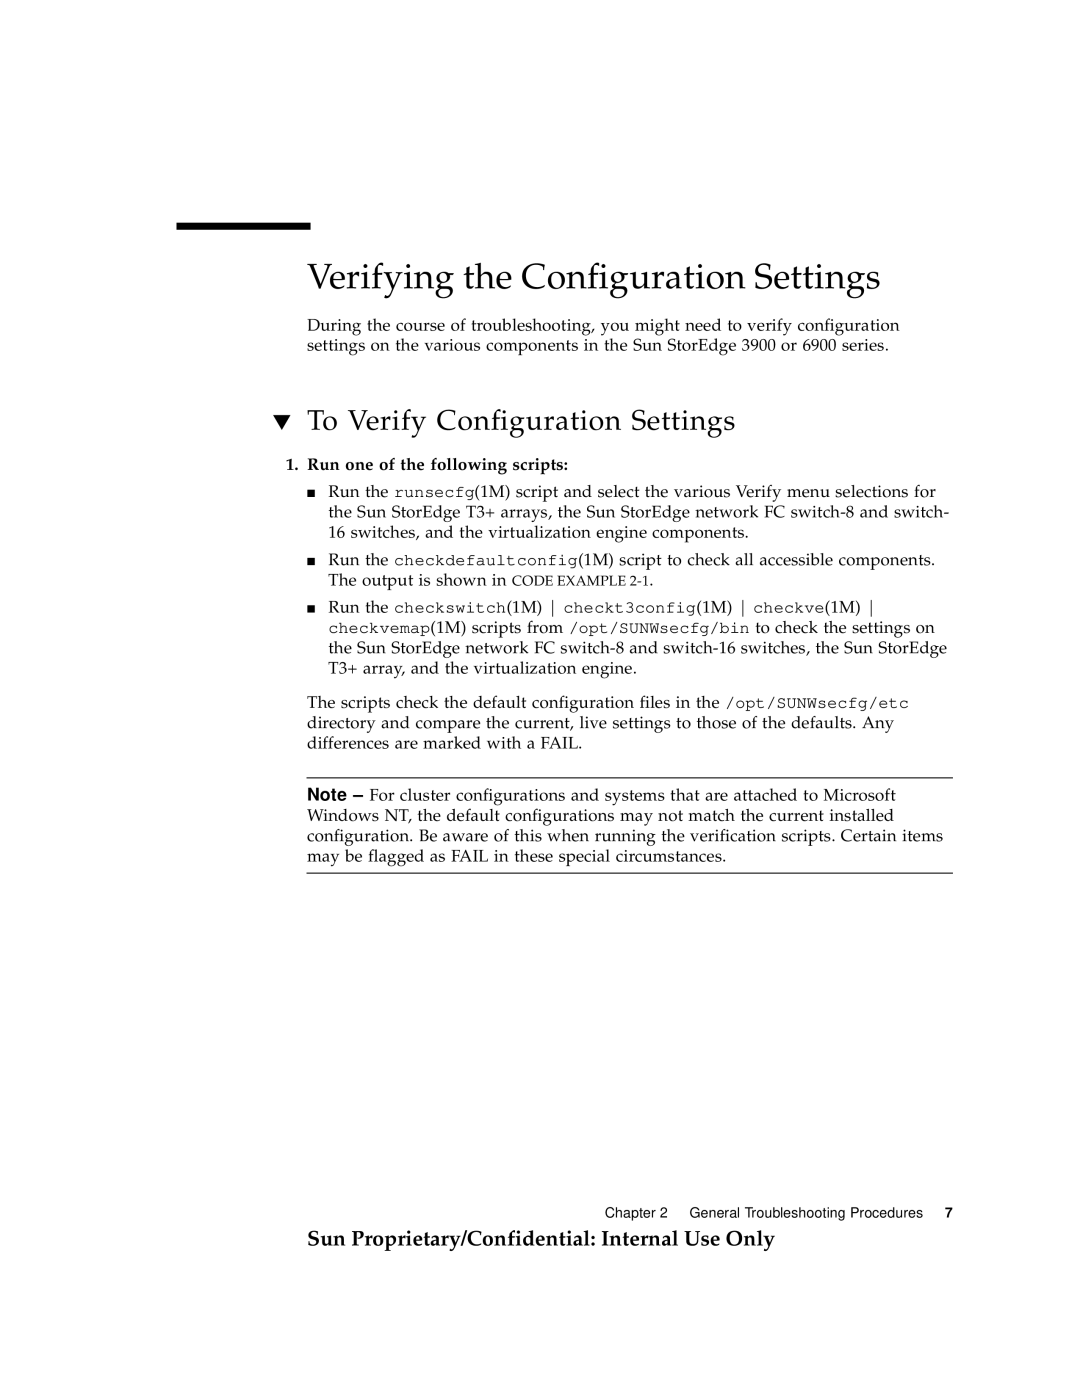 Sun Microsystems 6900, 3900 manual Verifying the Configuration Settings, To Verify Configuration Settings 